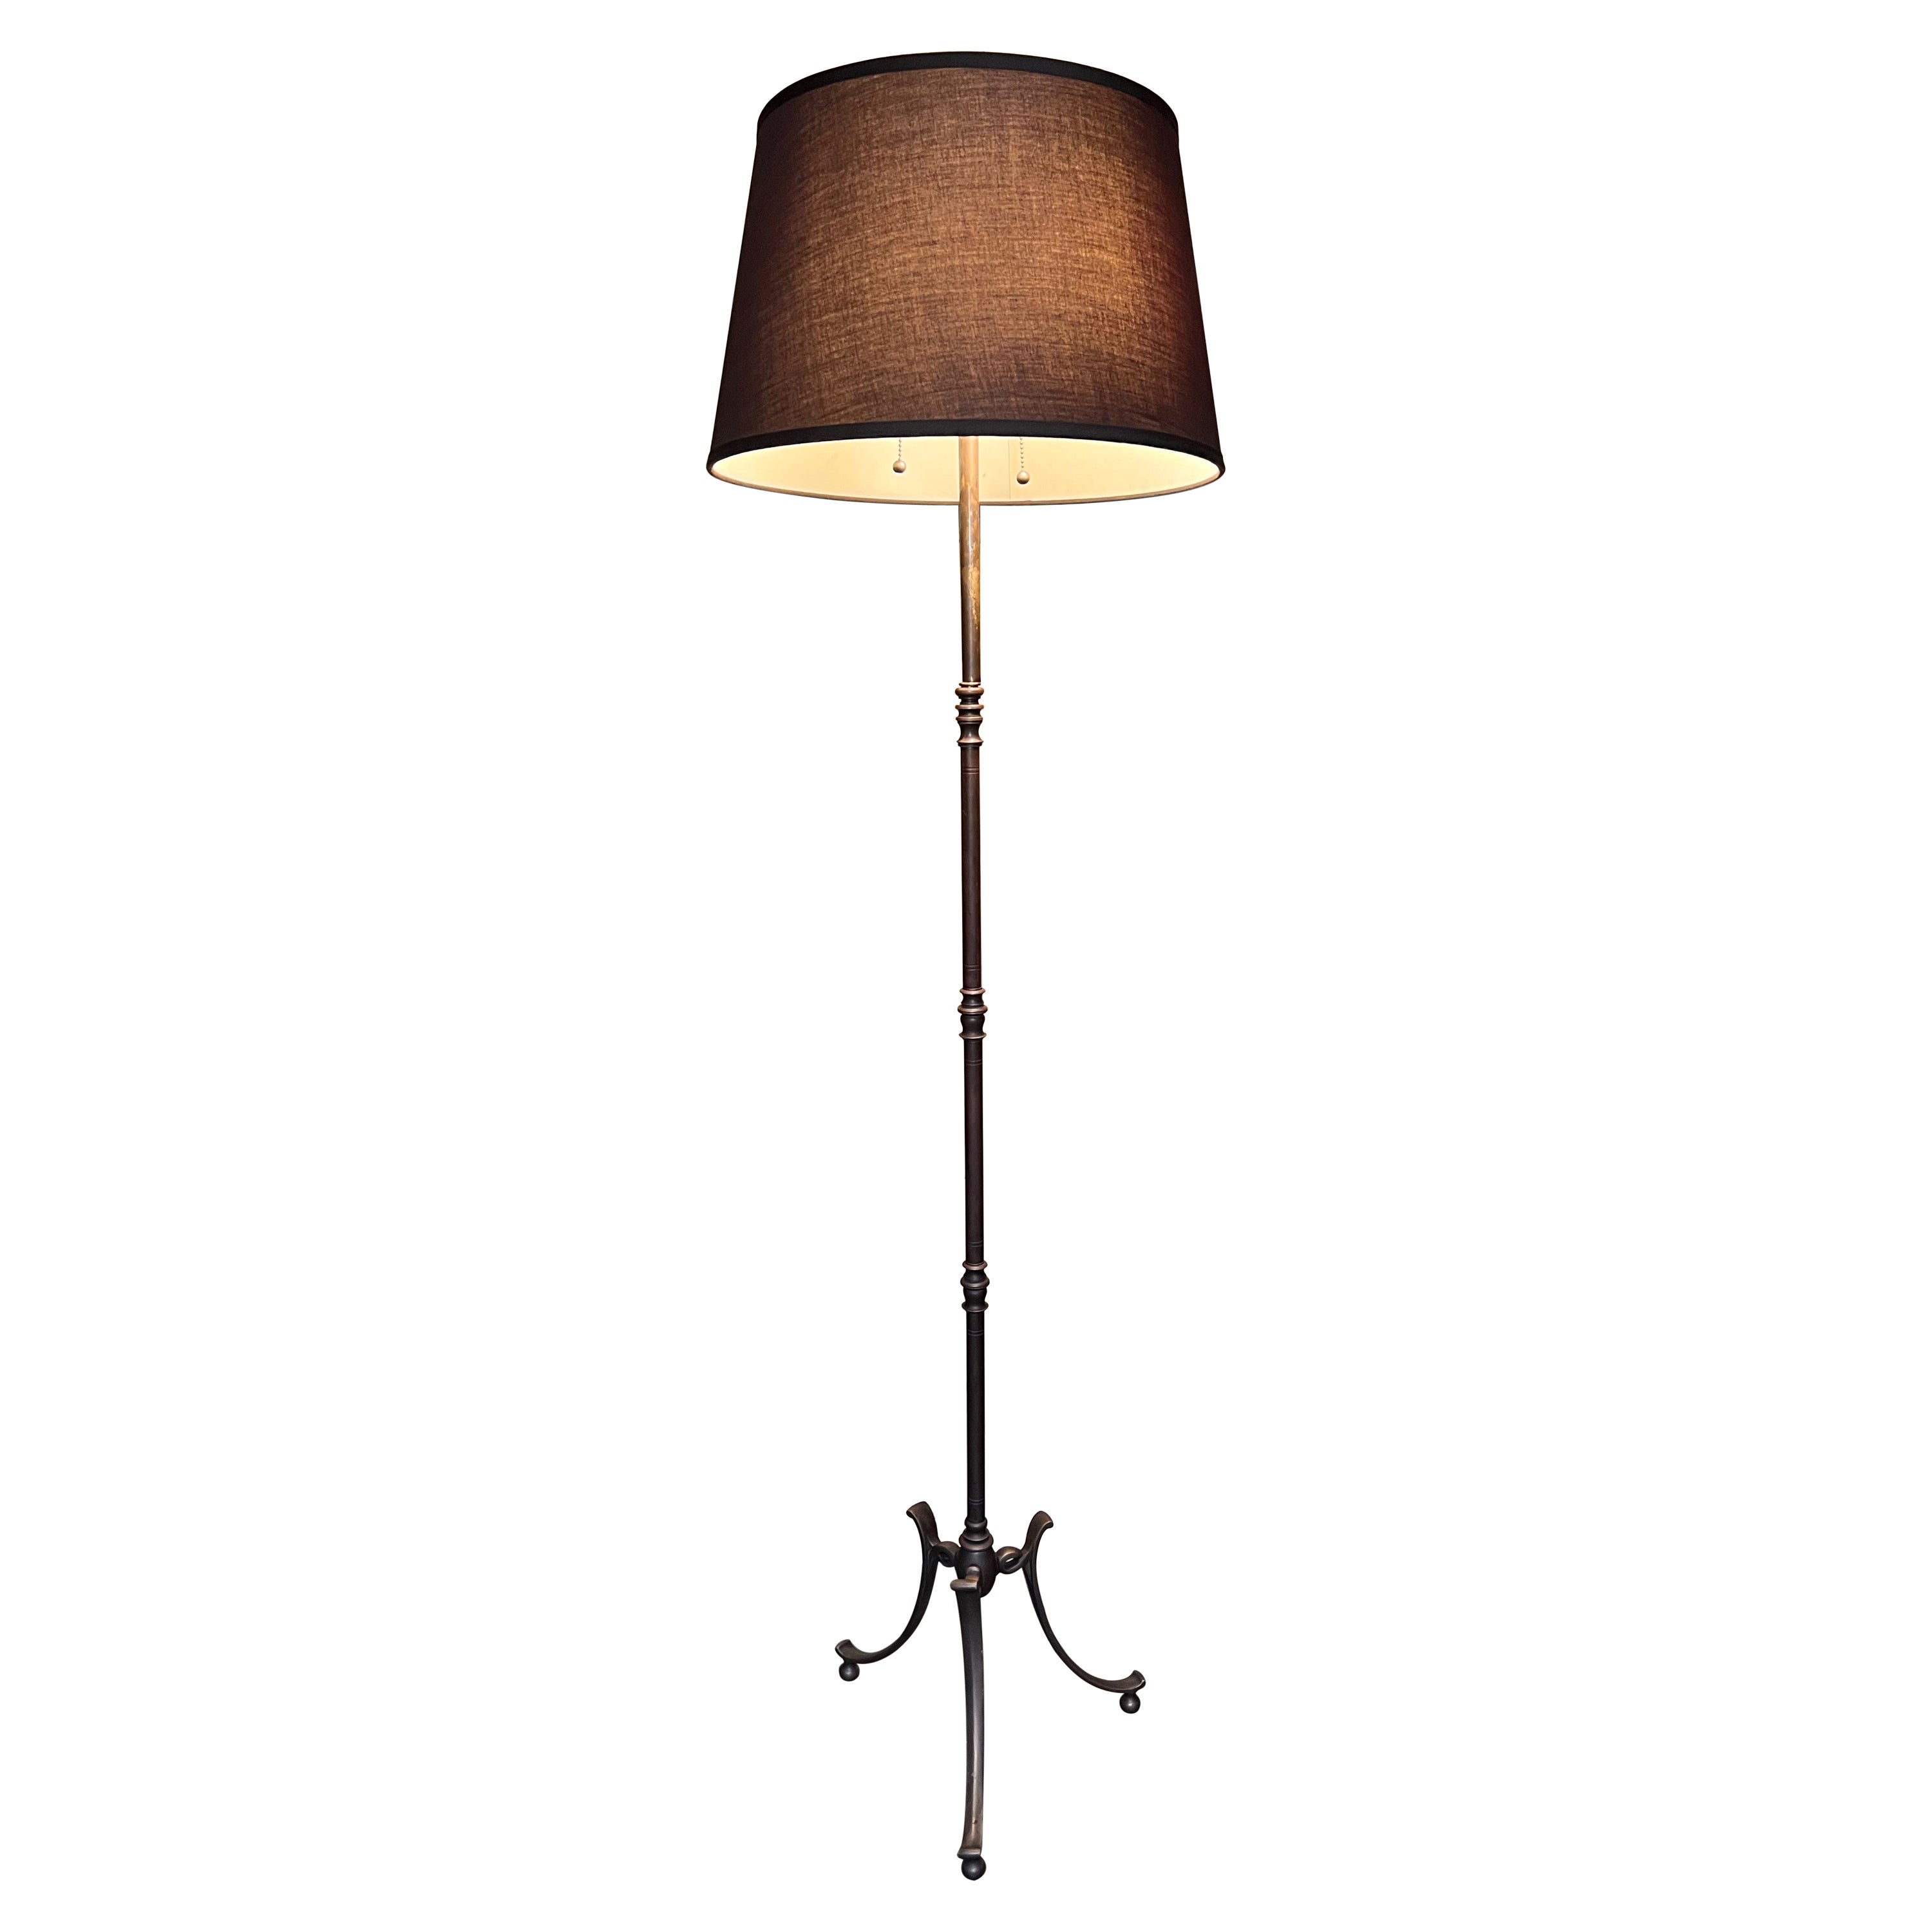 French Modern Style Darkened Bronze Floor Lamp